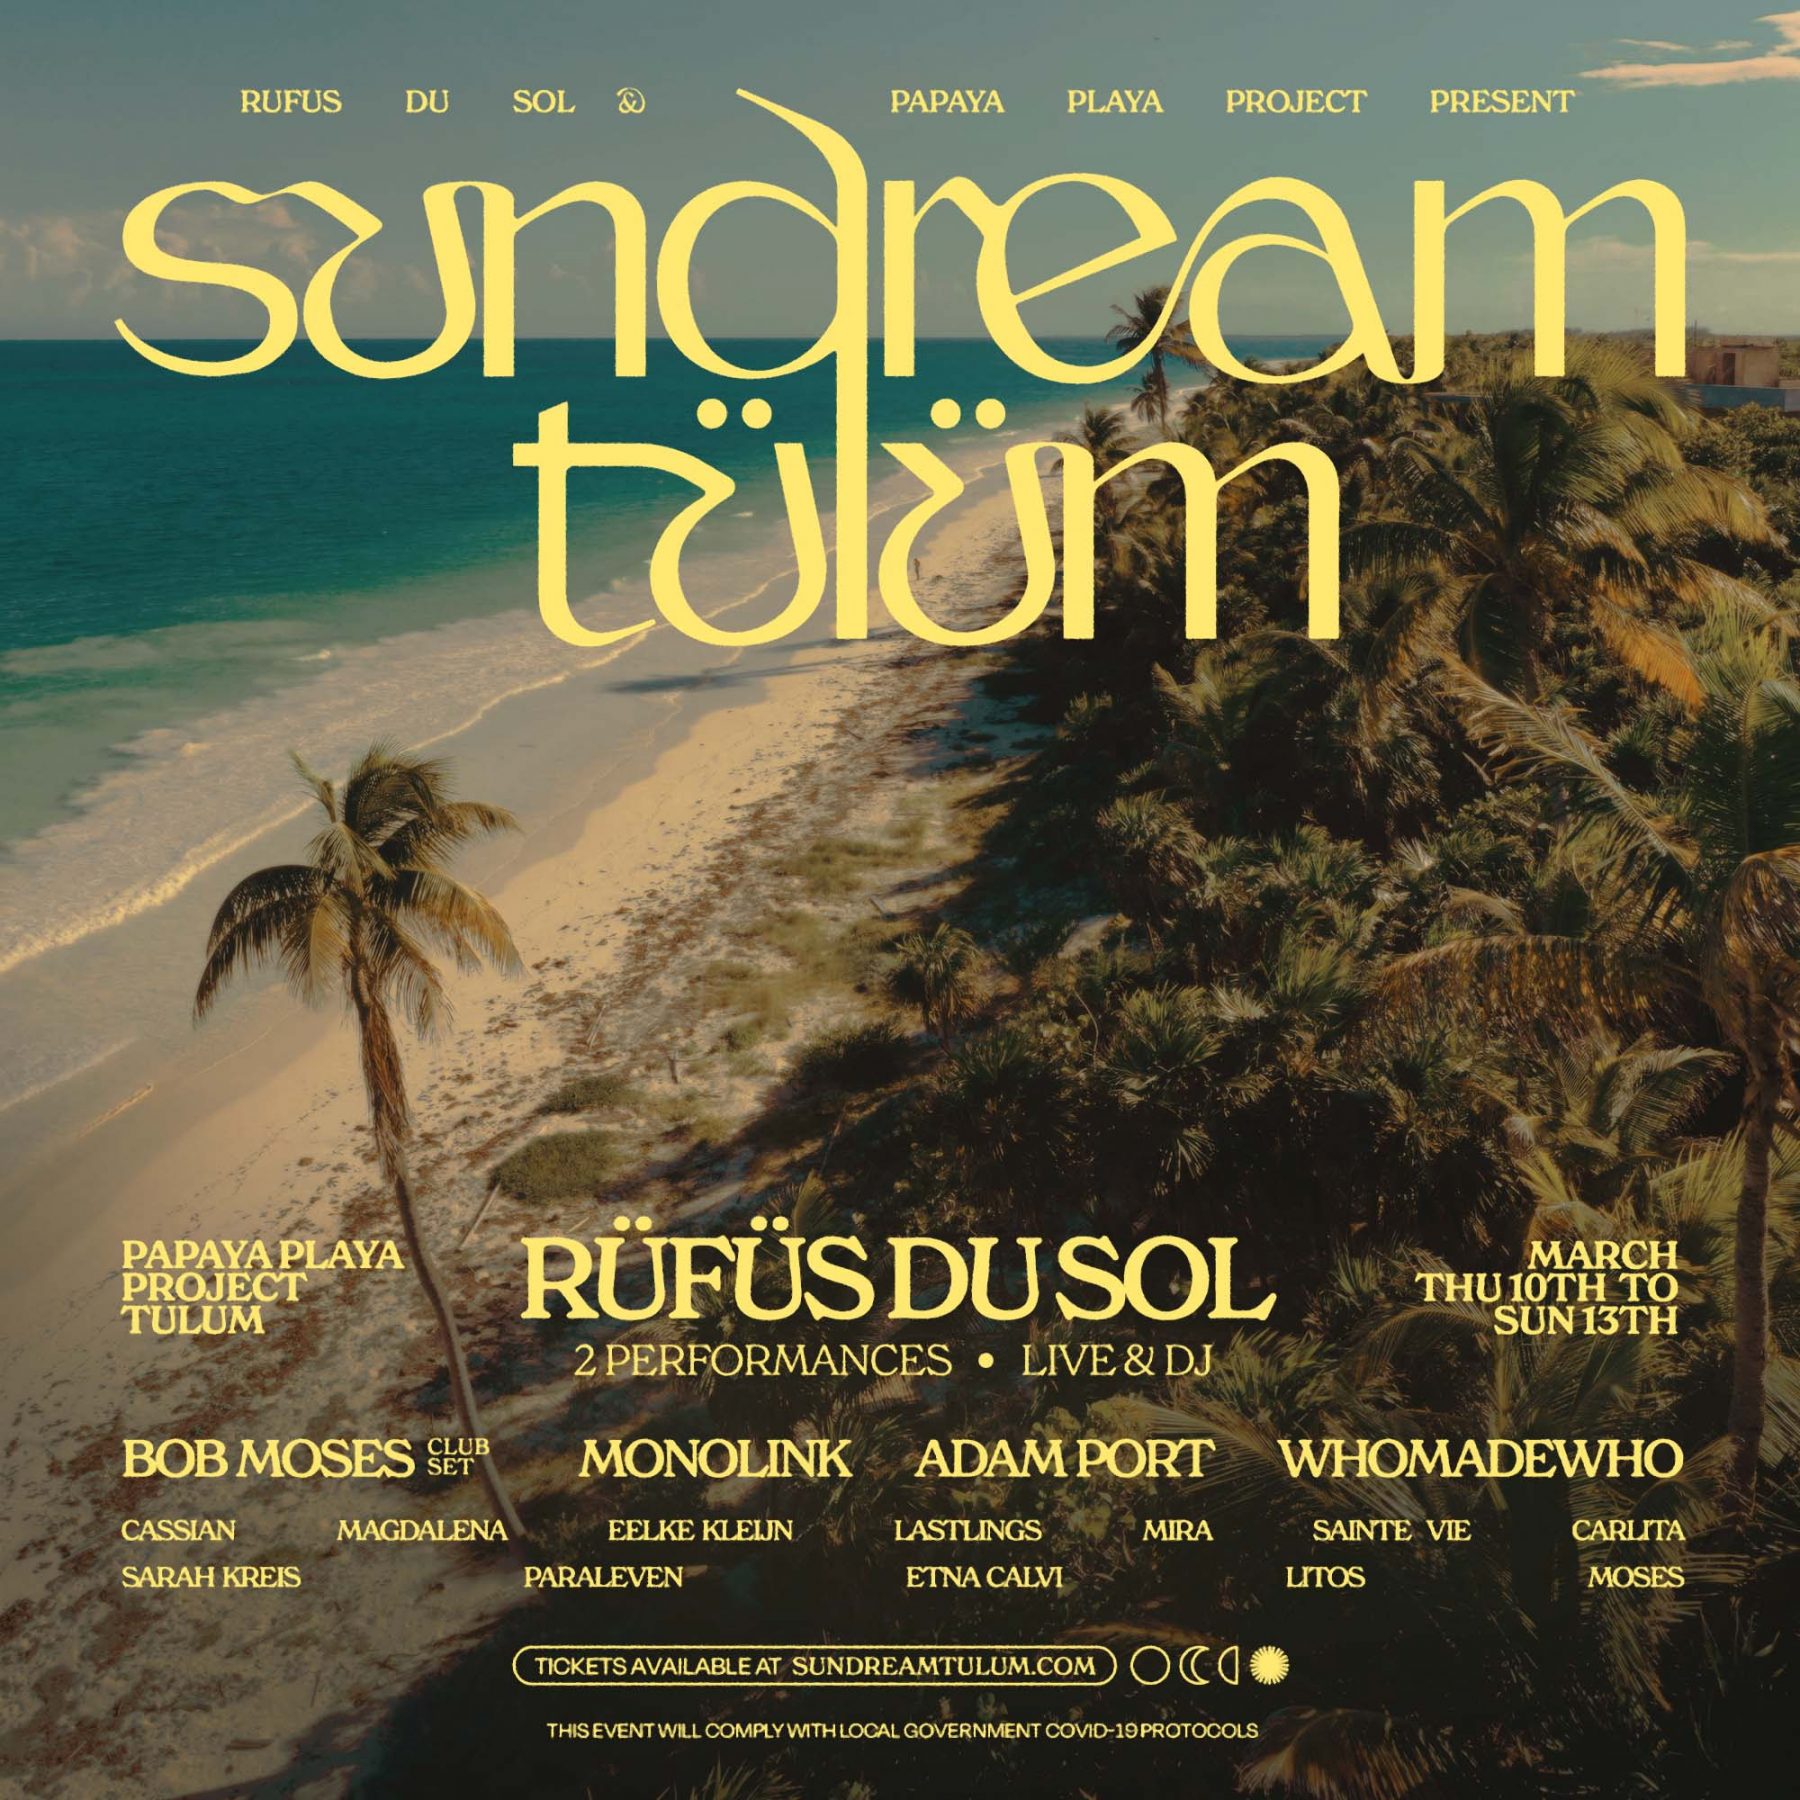 RÜFÜS DU SOL Is Heading To Mexico For Their New Festival, Sundream